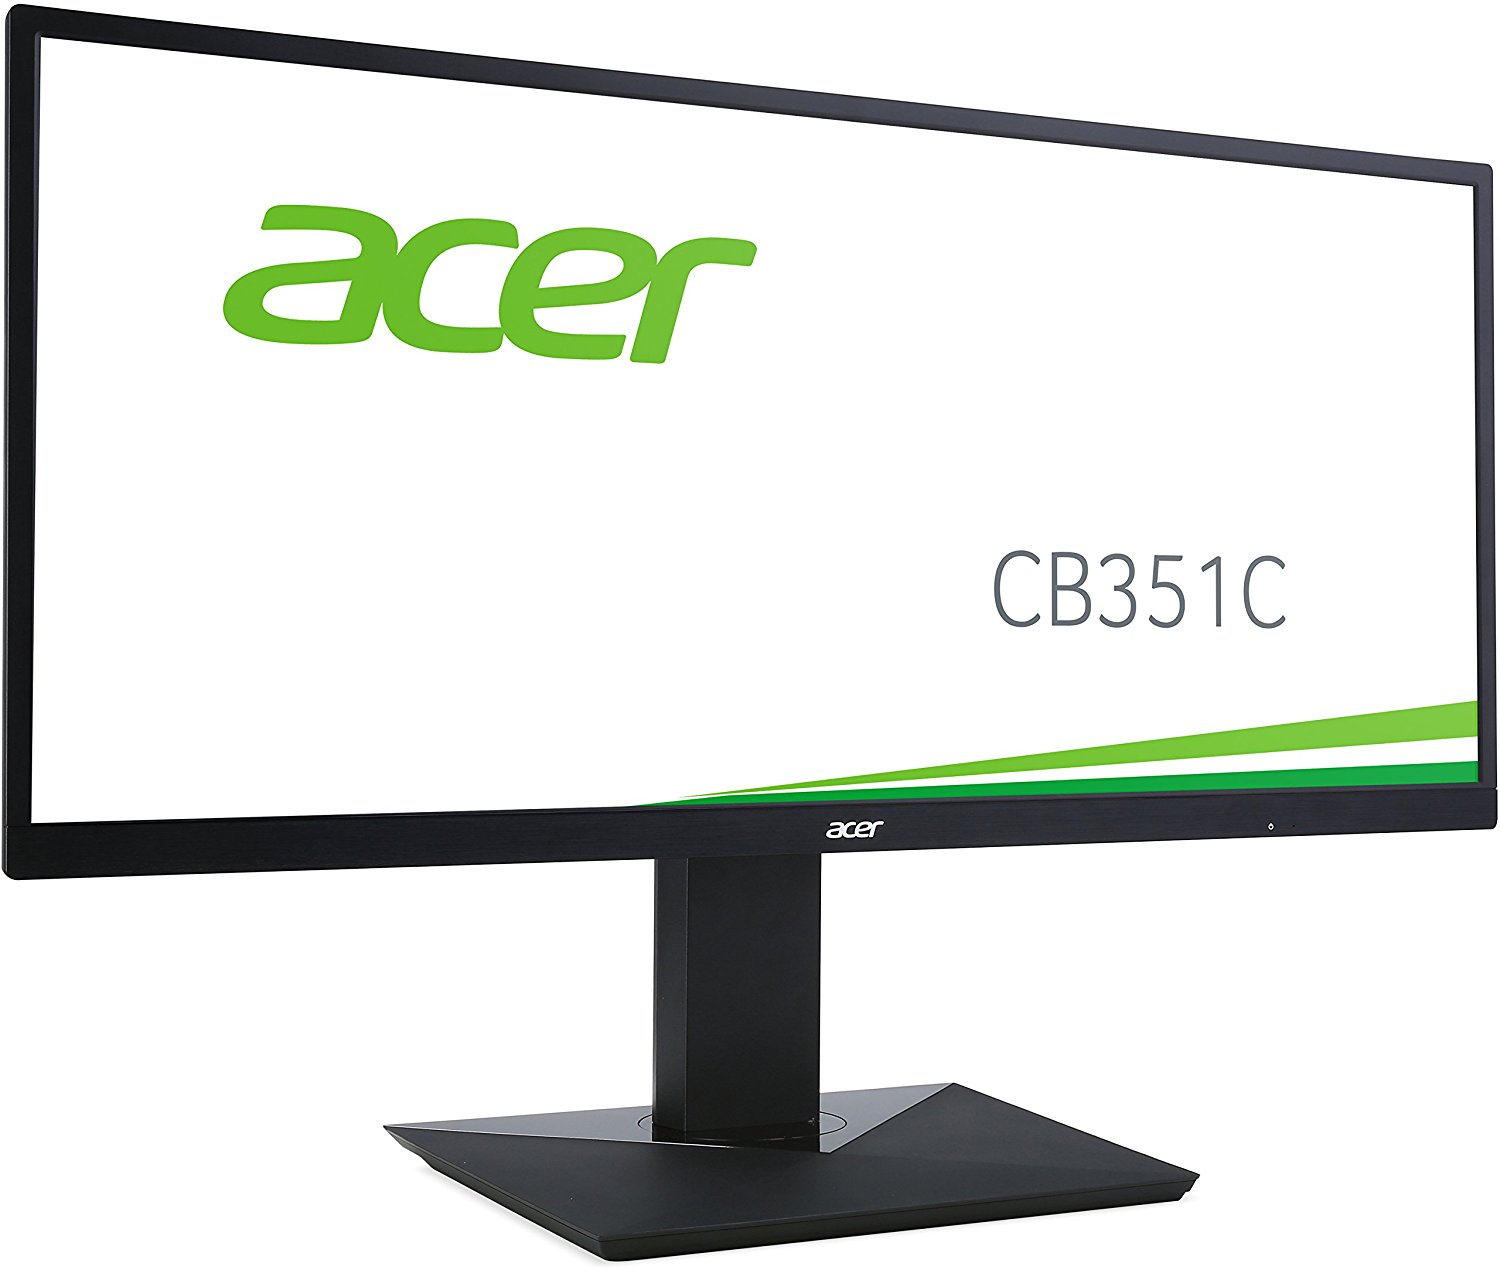 Acer CB351C 35 inch 21:9 UltraWide 2560 x 1080 4ms DVI-DL HDMI DP USB3.0 Black LED Monitor - image 1 of 6